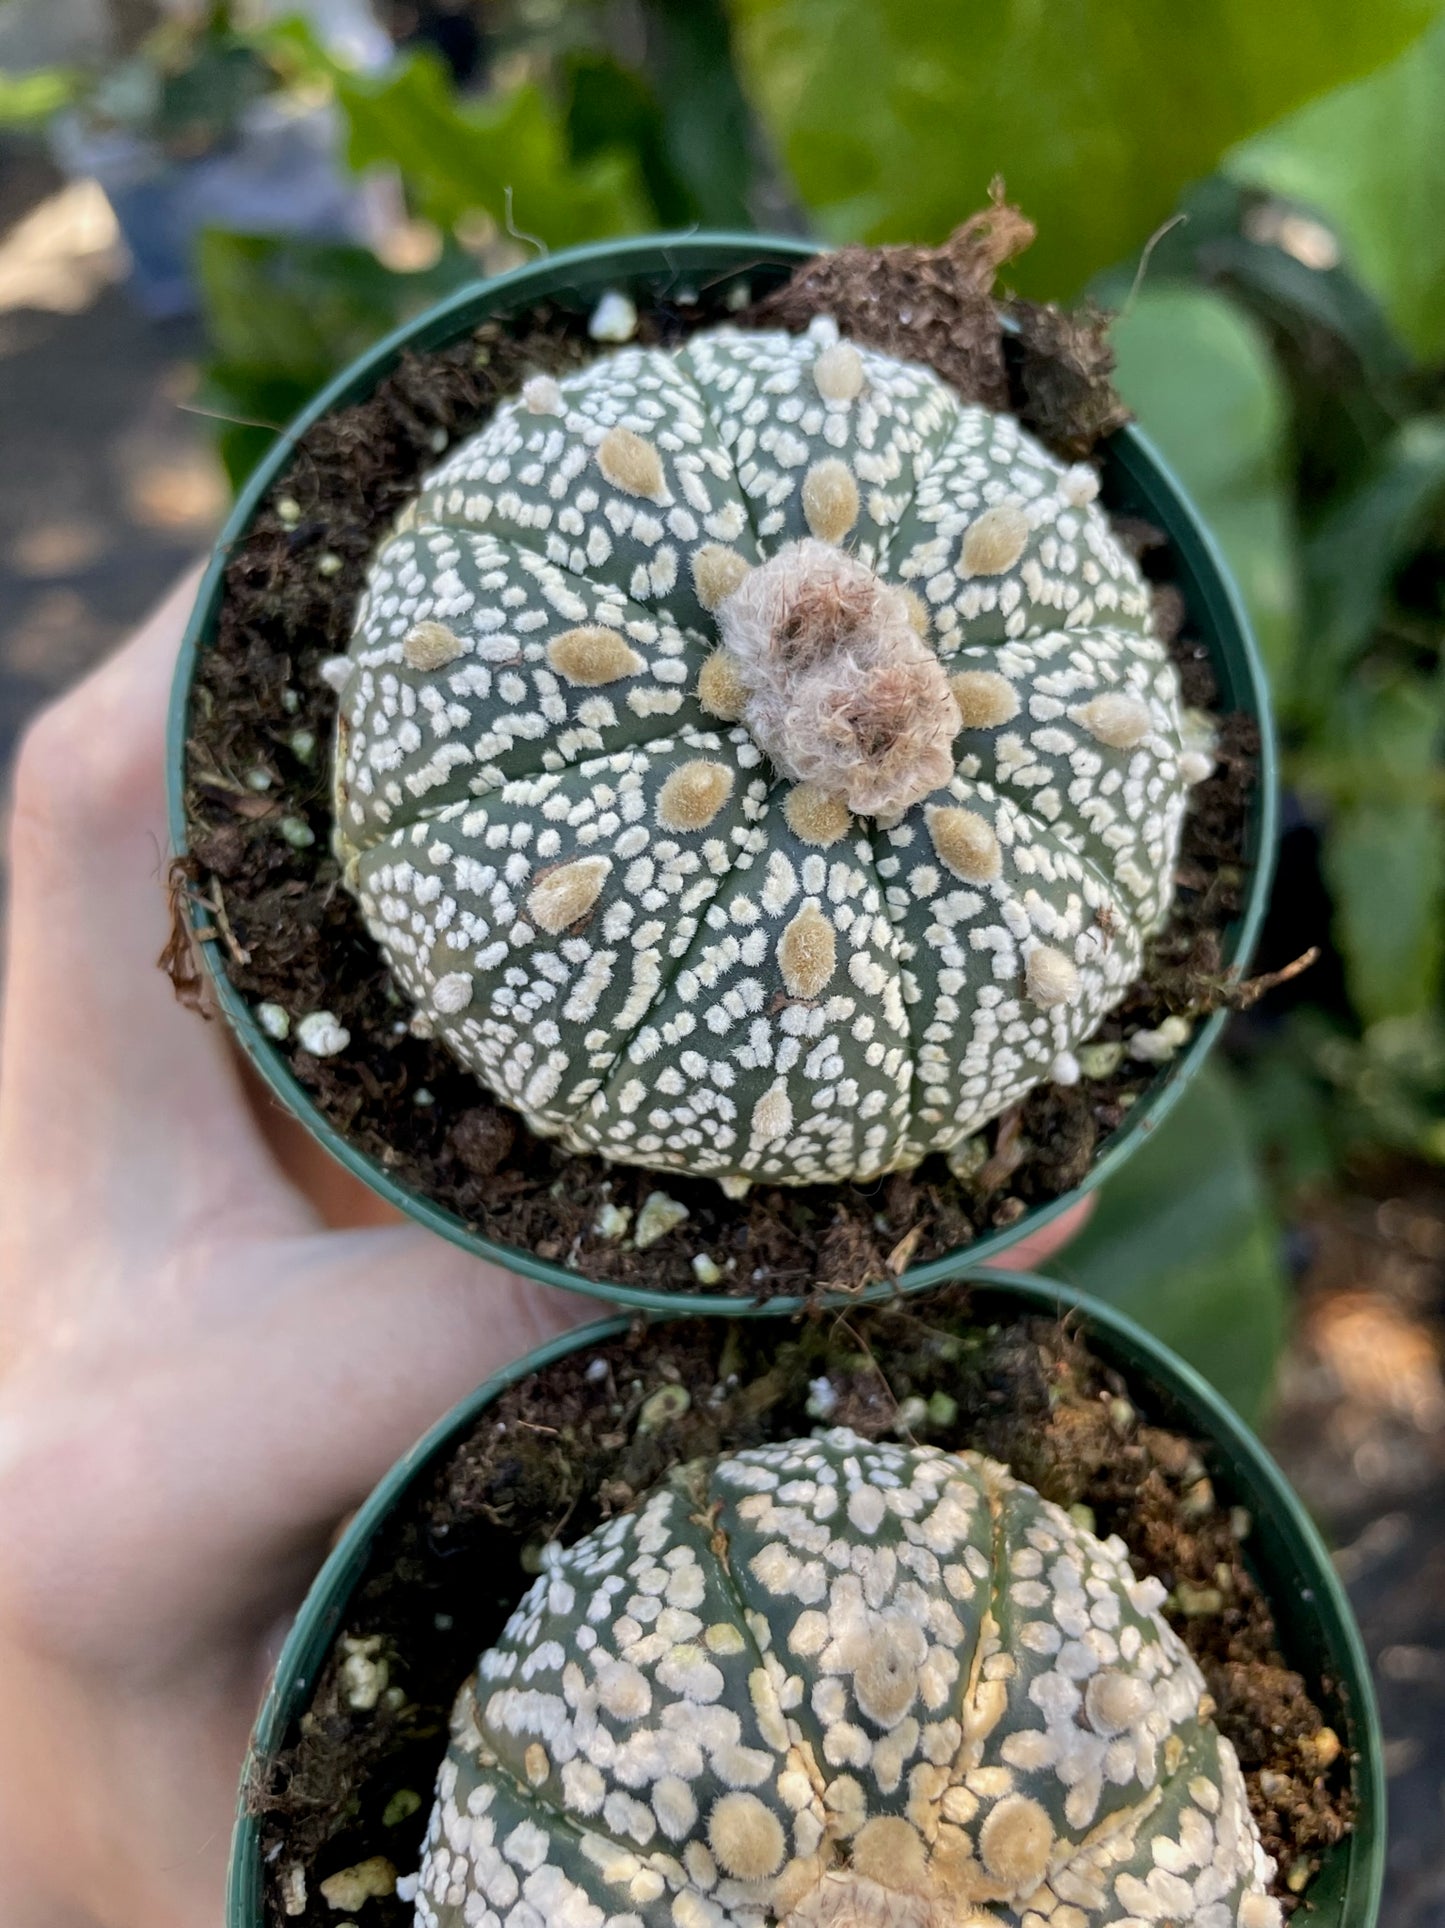 Astrophytum asterias super kabuto "Sand dollar cactus"